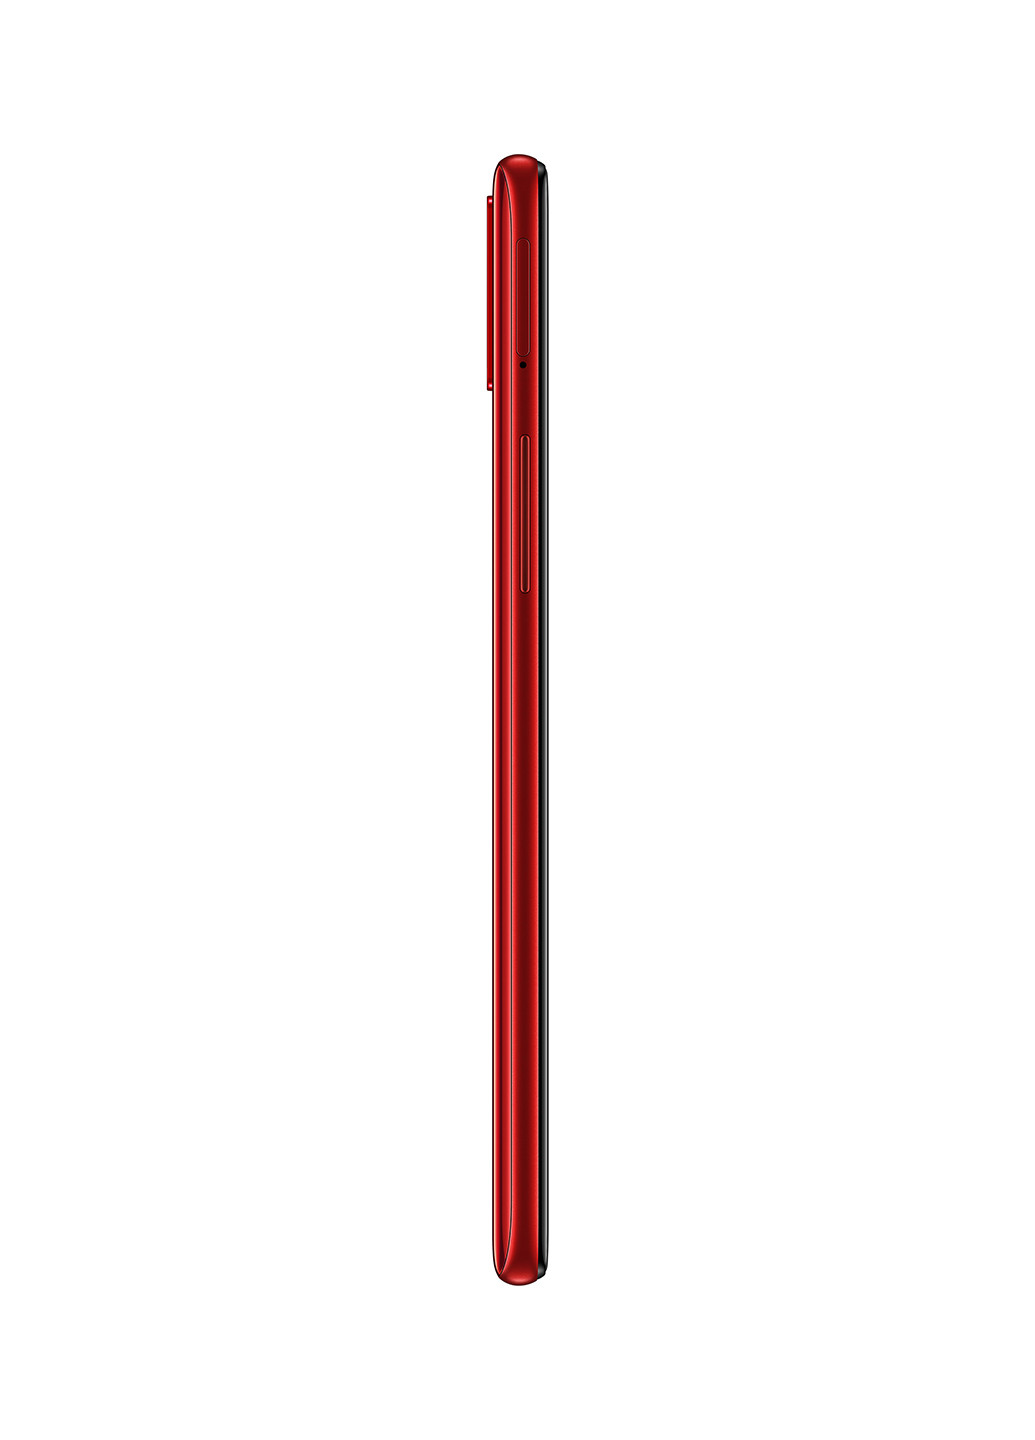 Смартфон Samsung Galaxy A20s 3/32Gb Red красный